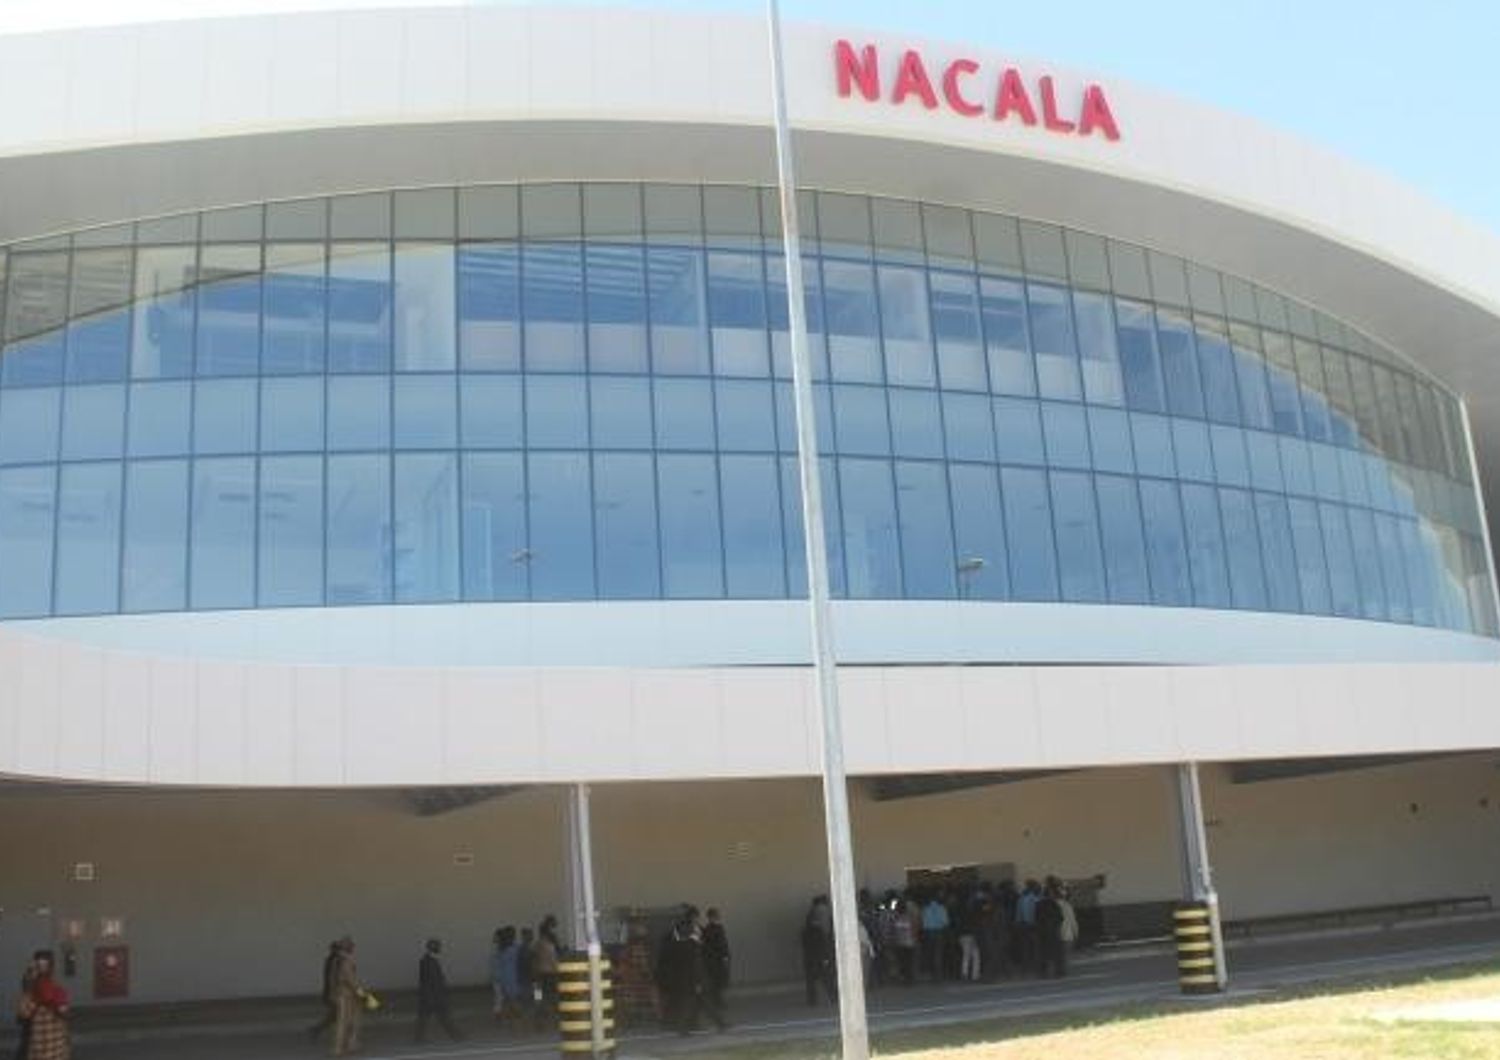 &nbsp;aeroporto di Nacala Mozambico (sito)